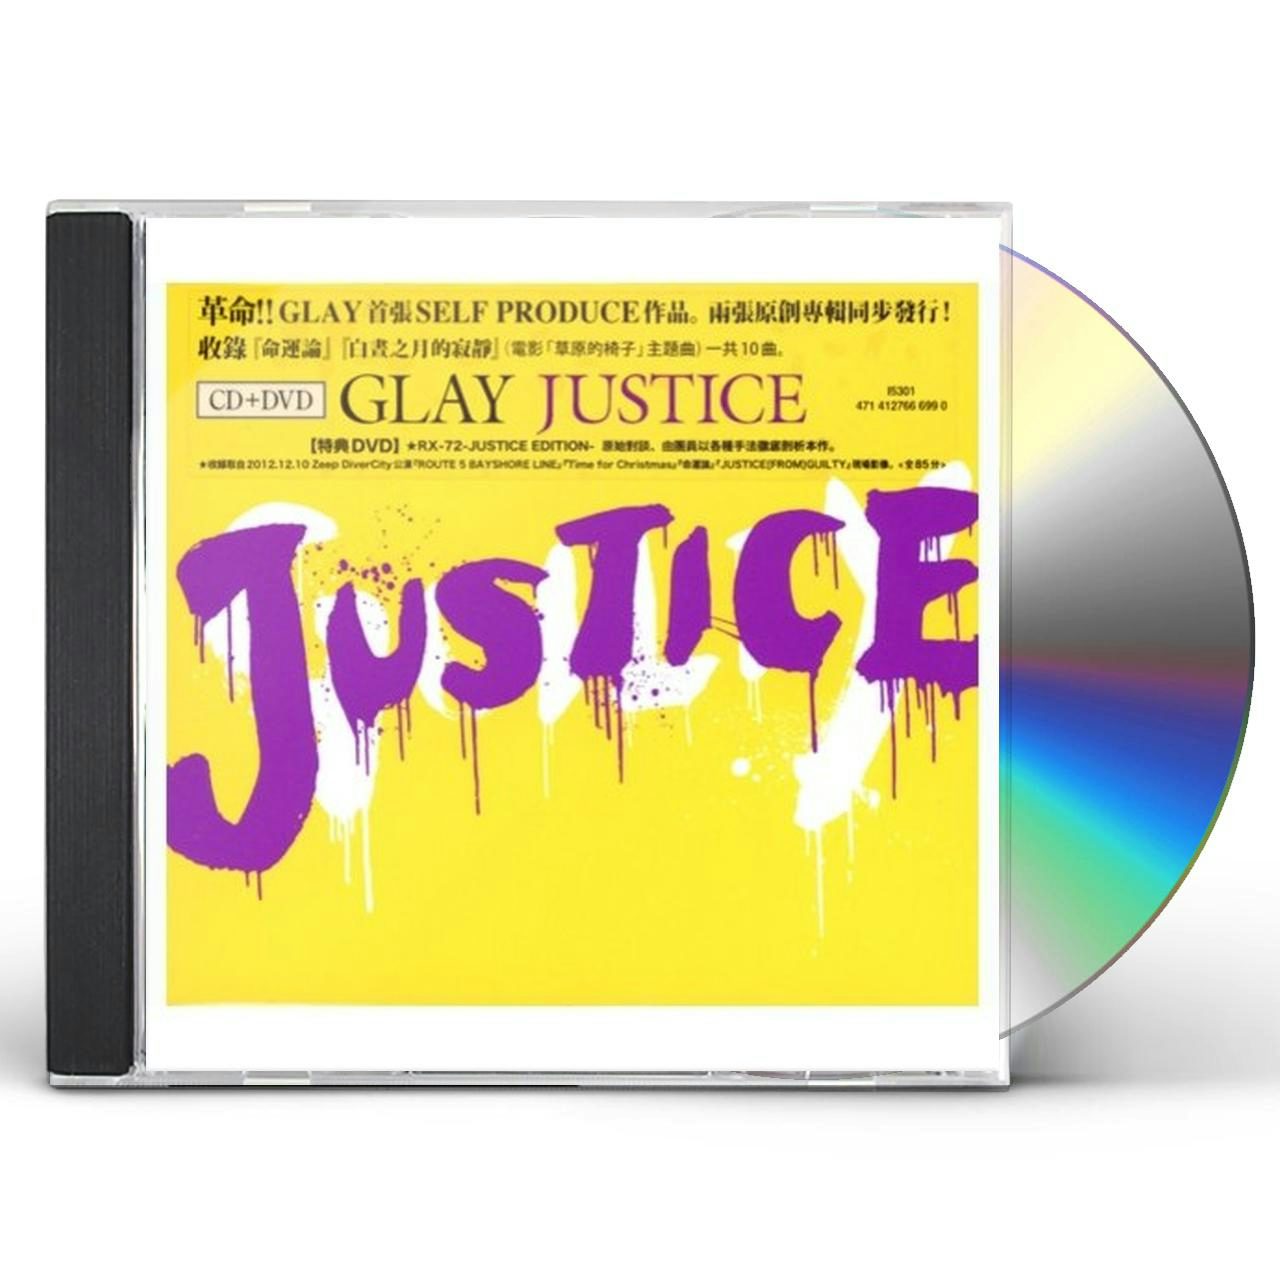 GLAY JUSTICE CD